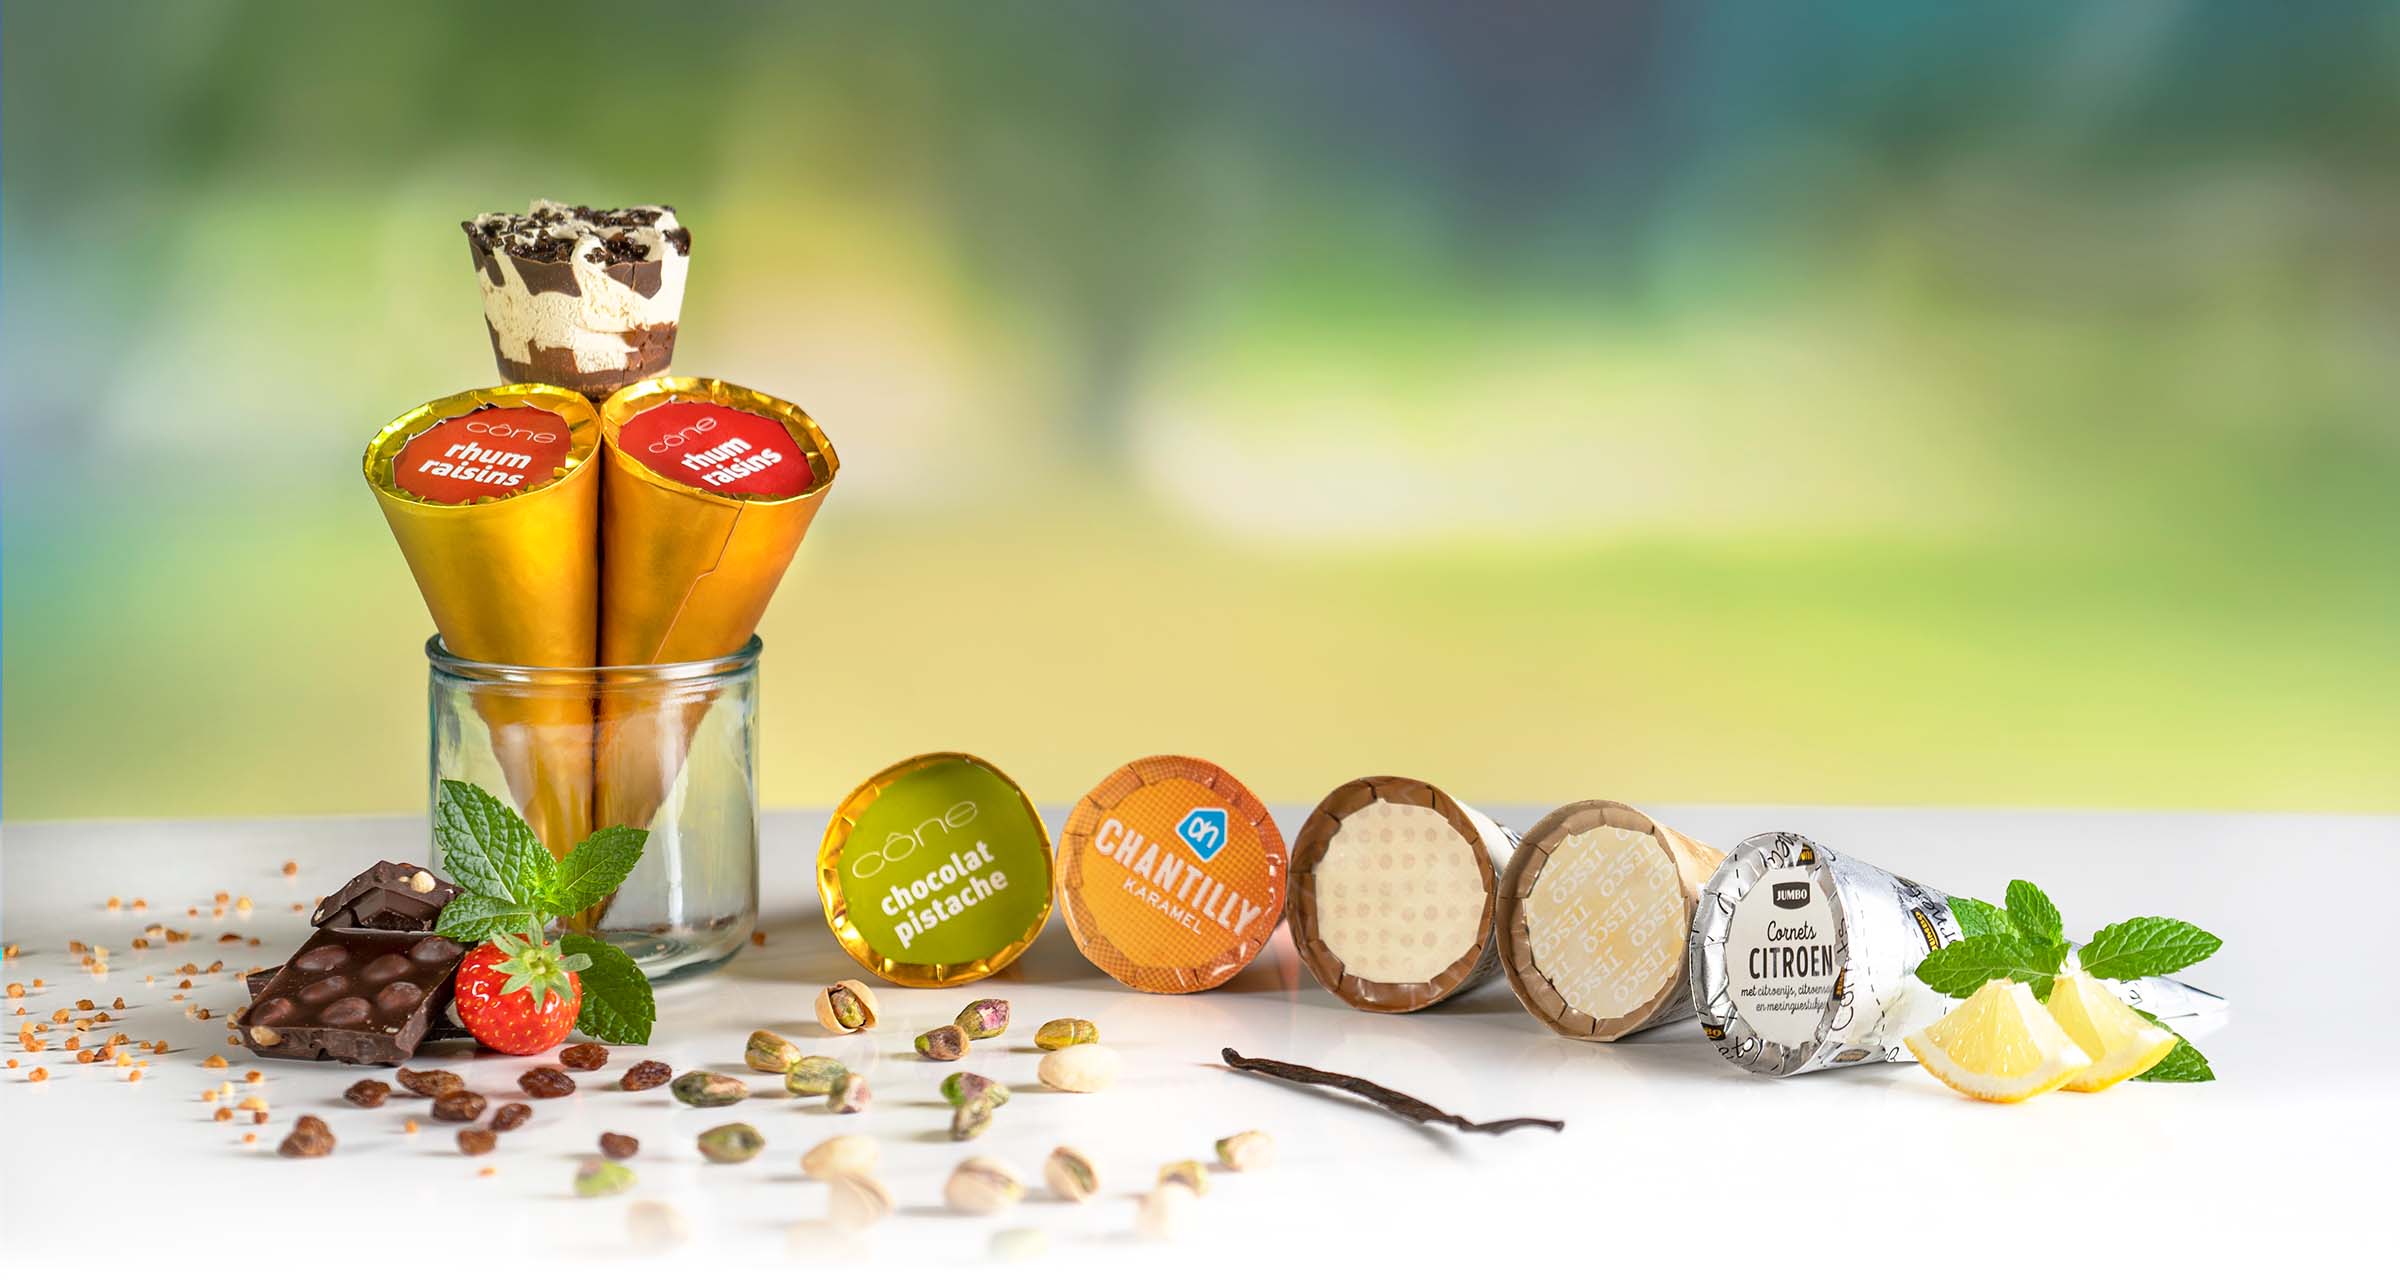 Verstraete Graphics specialist in cardboard ice cream lids for cornets and ice cream cones